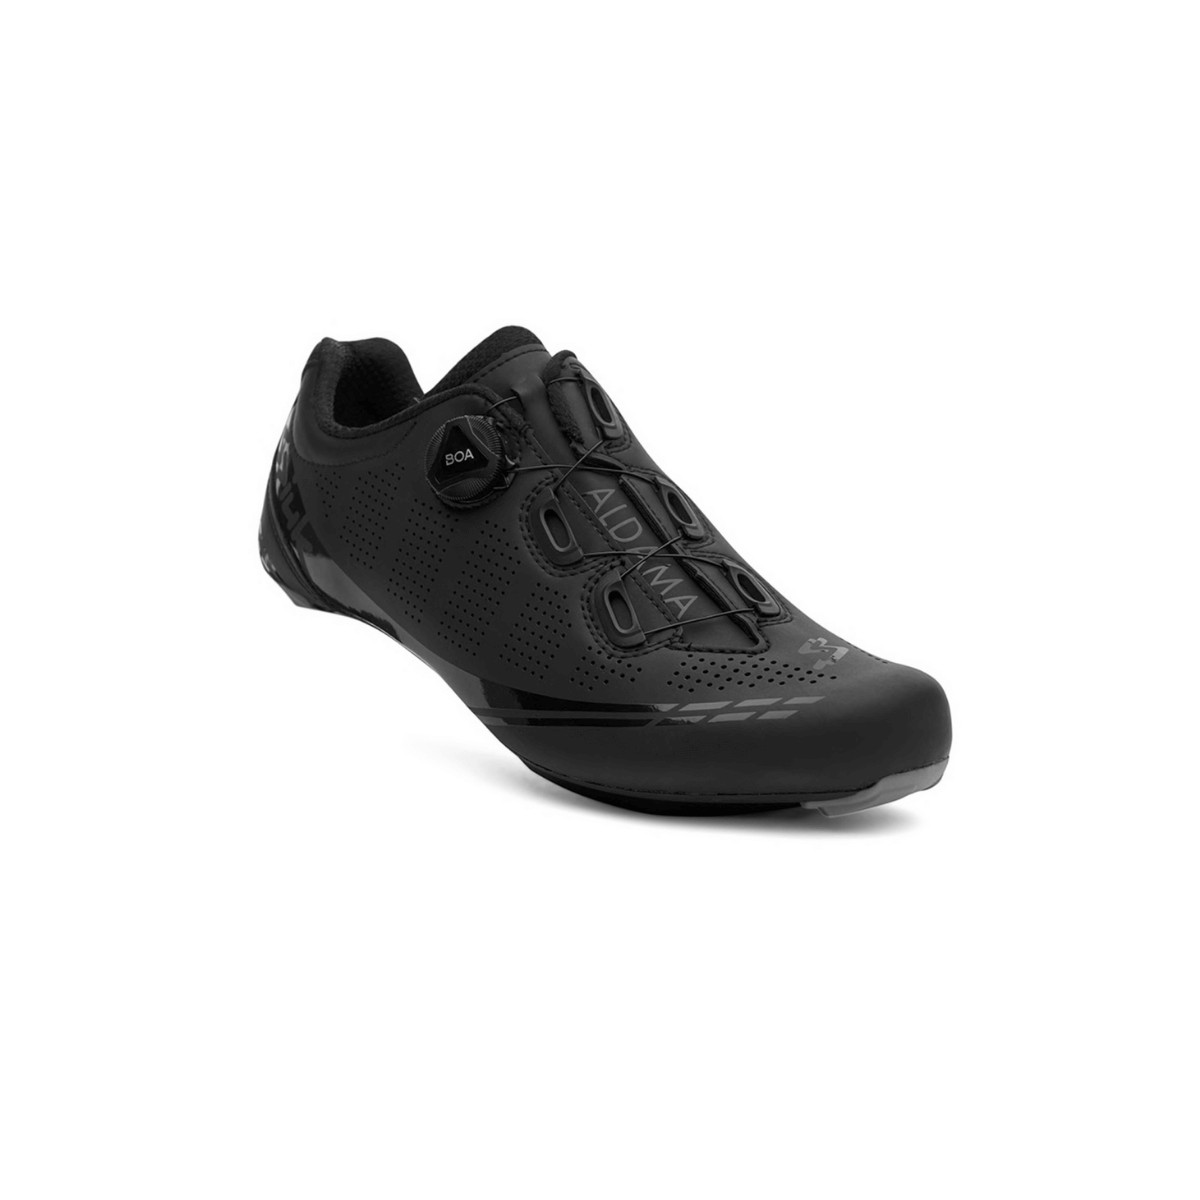 Spiuk Aldama Road Shoes Matte Black, Size 42